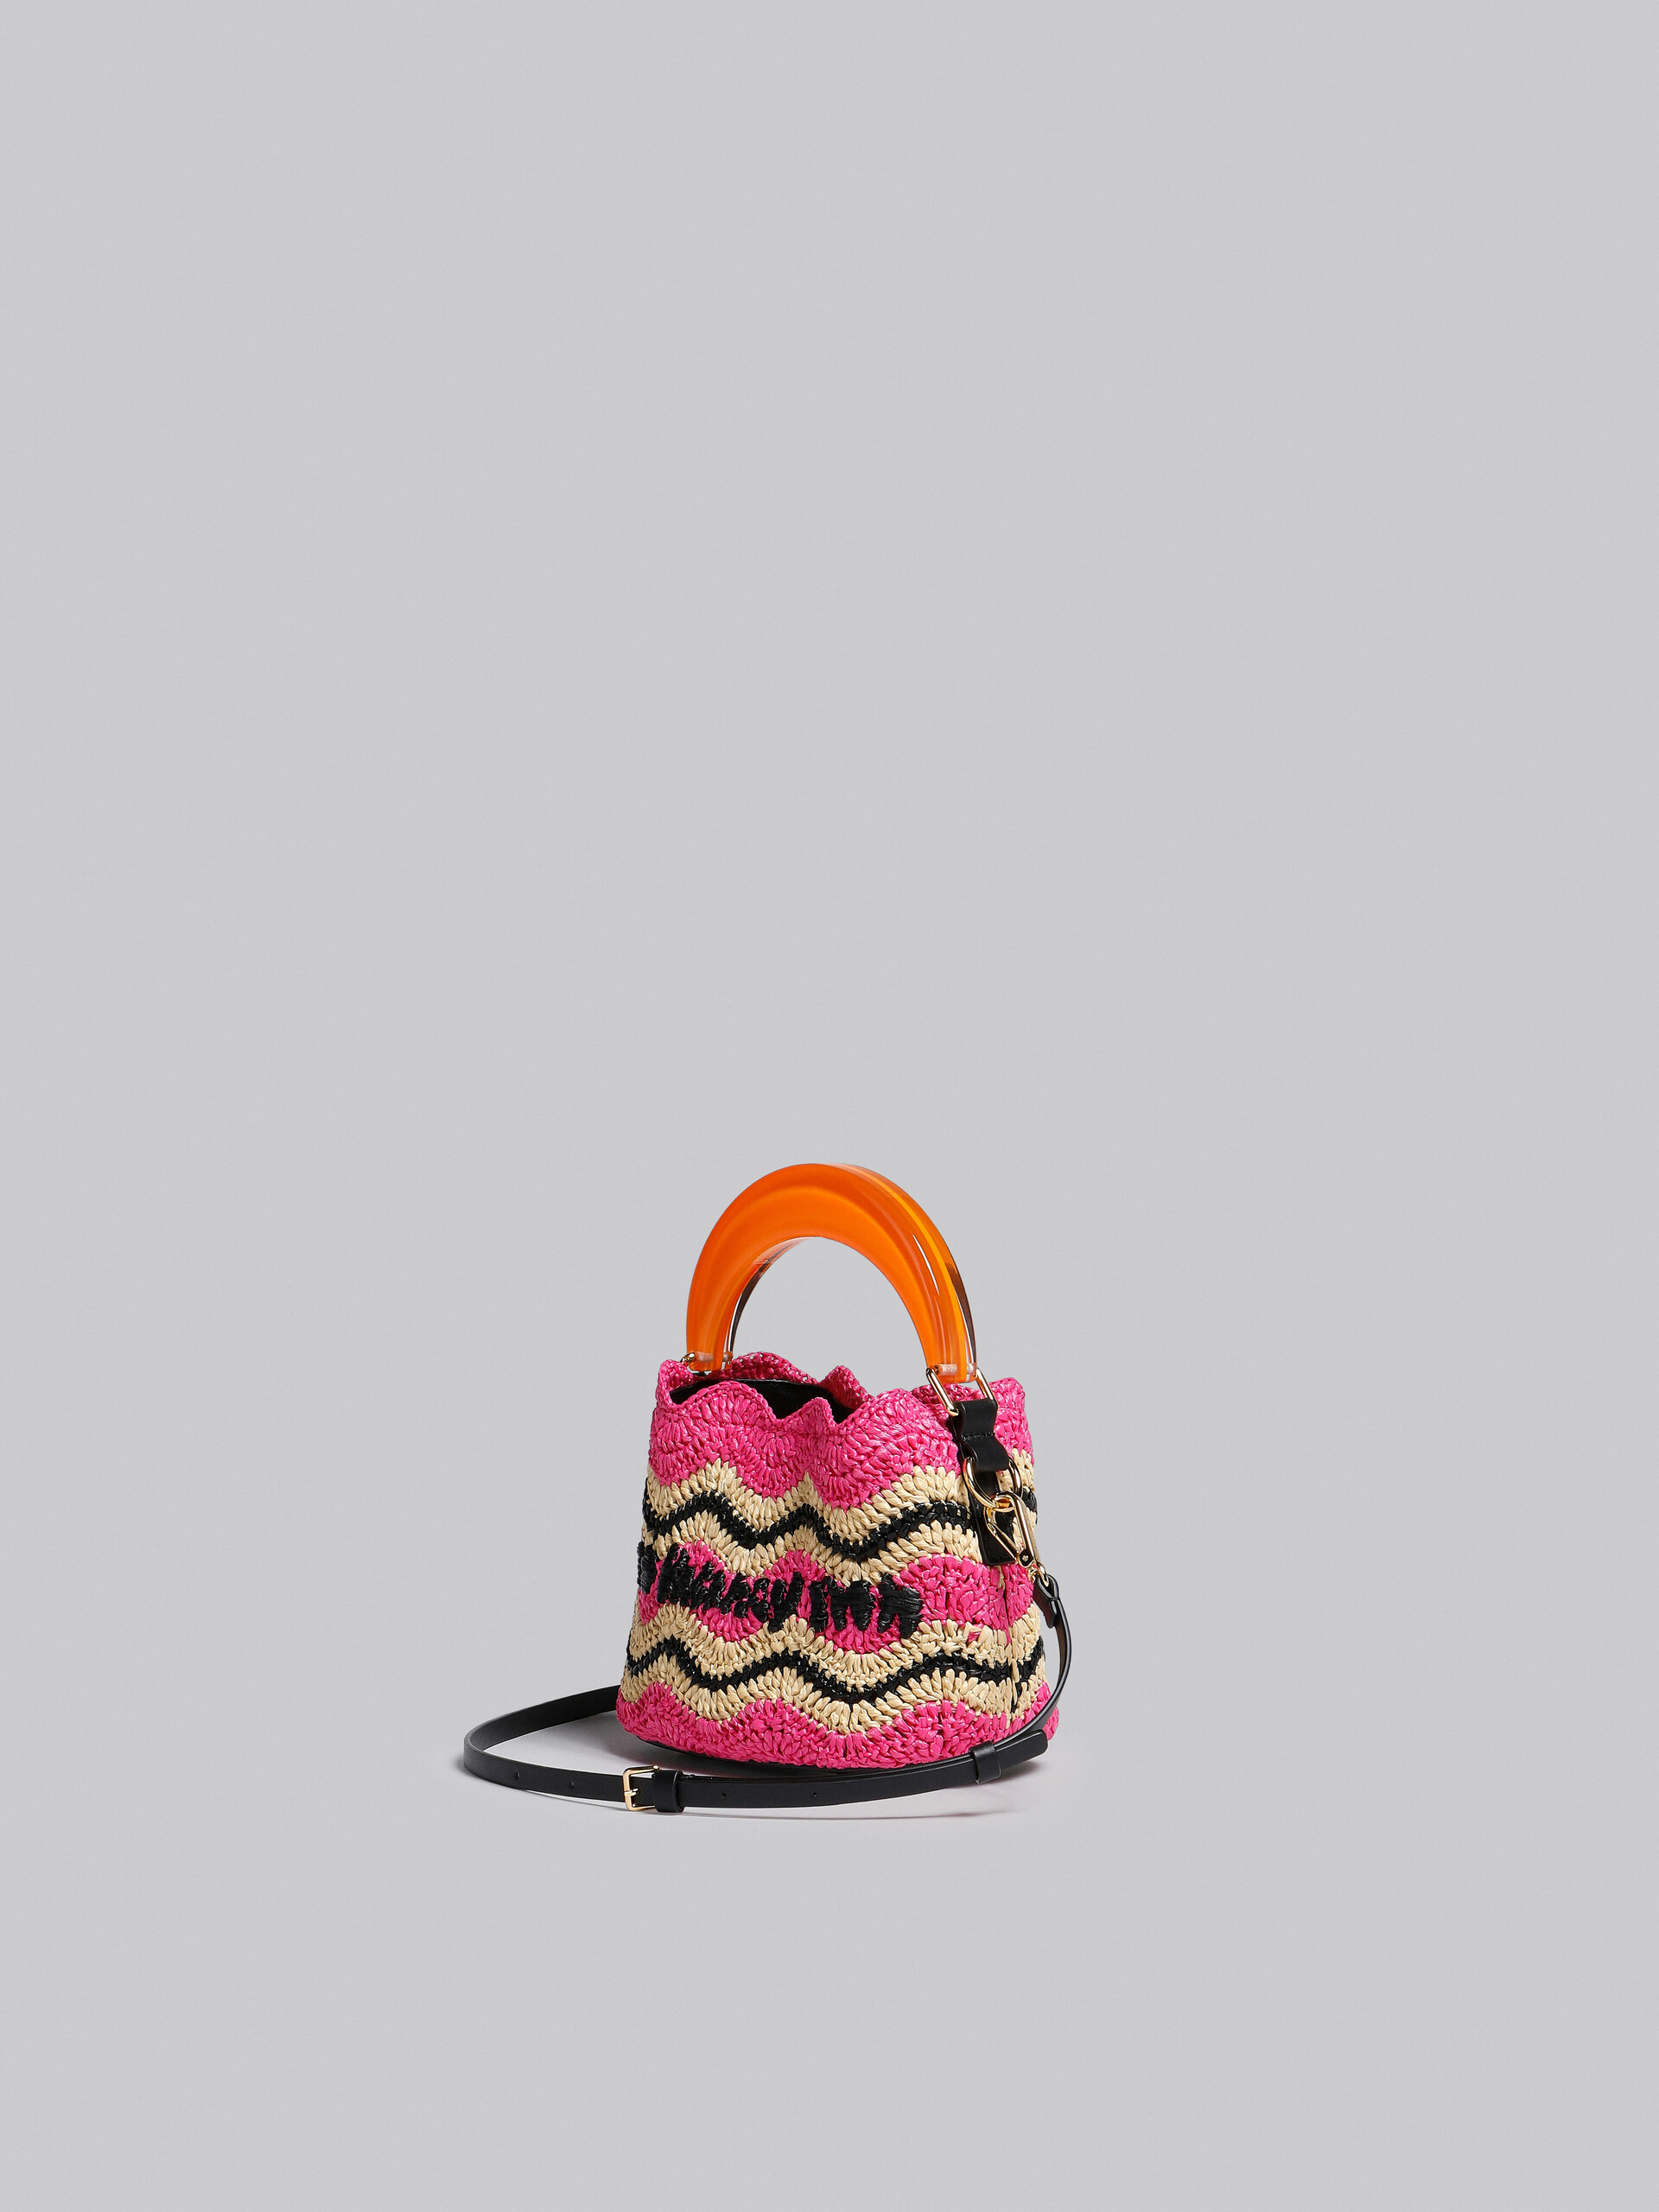 Marni x No Vacancy Inn - Venice Mini Bucket in fuchsia crochet raffia - Shoulder Bag - Image 3